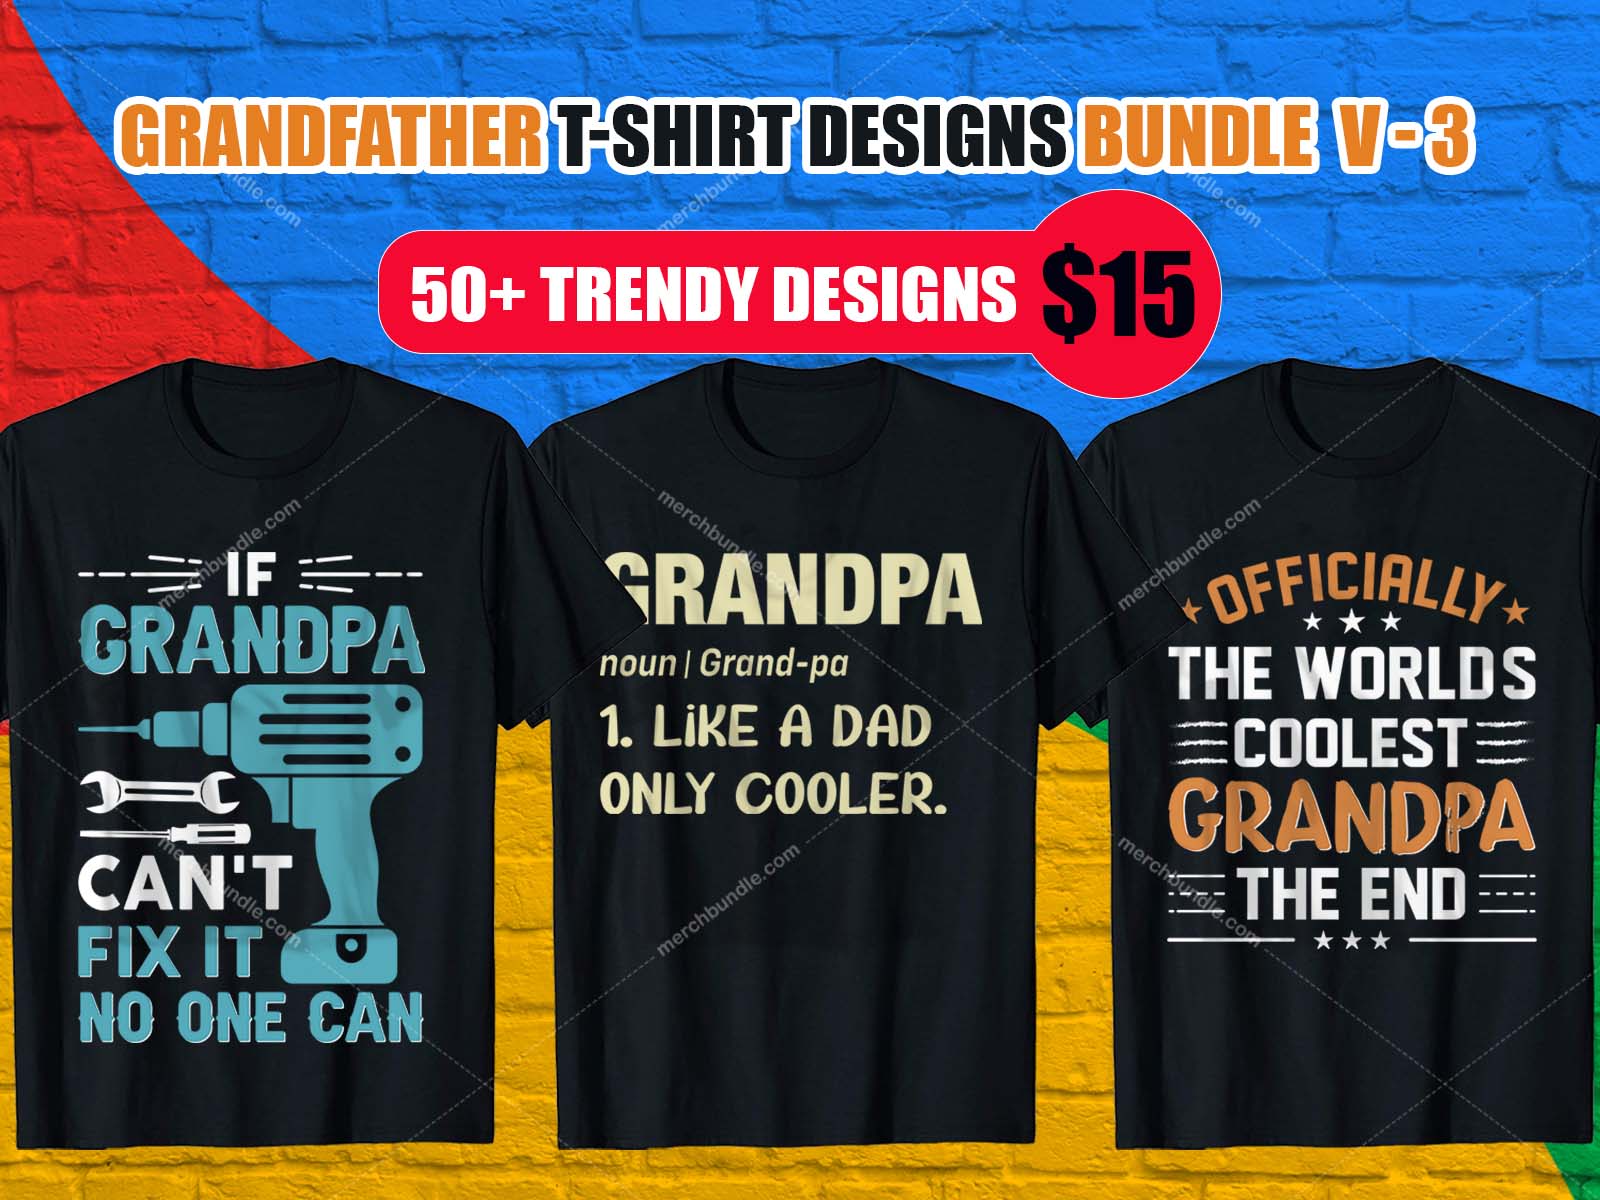 GrandFather Shirts Design Bundle